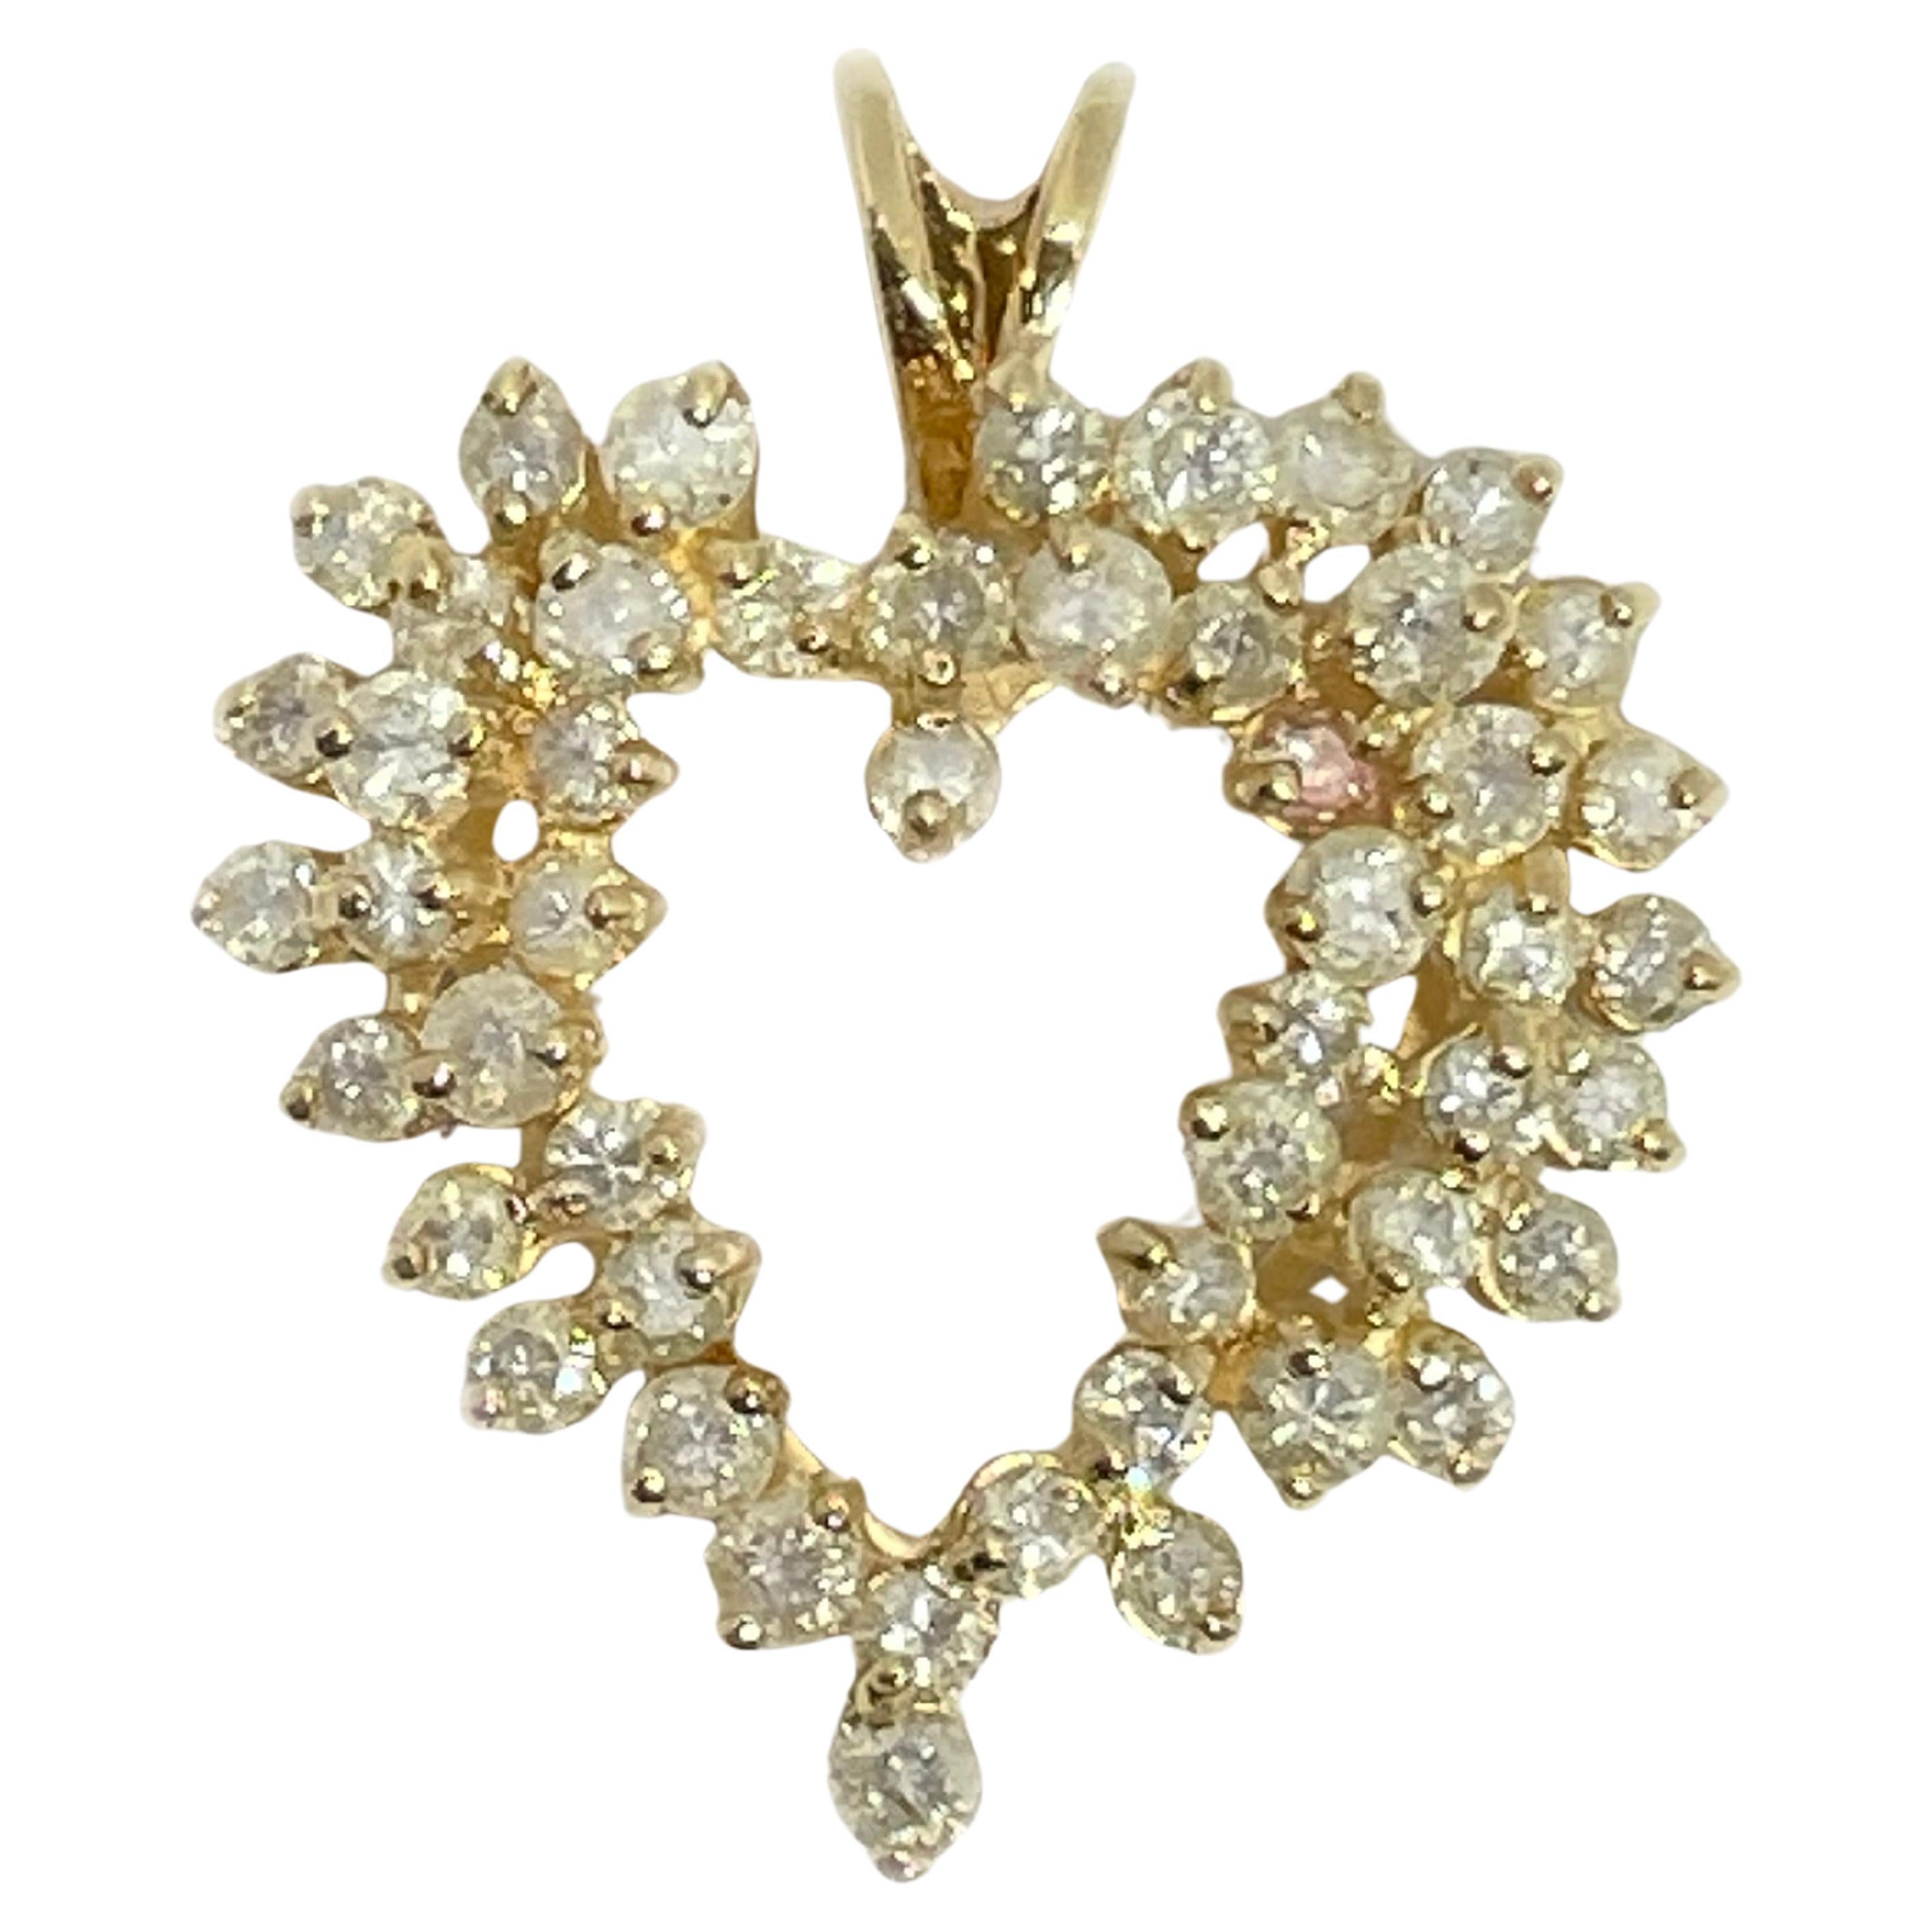 Yellow Gold Diamond Heart Pendant